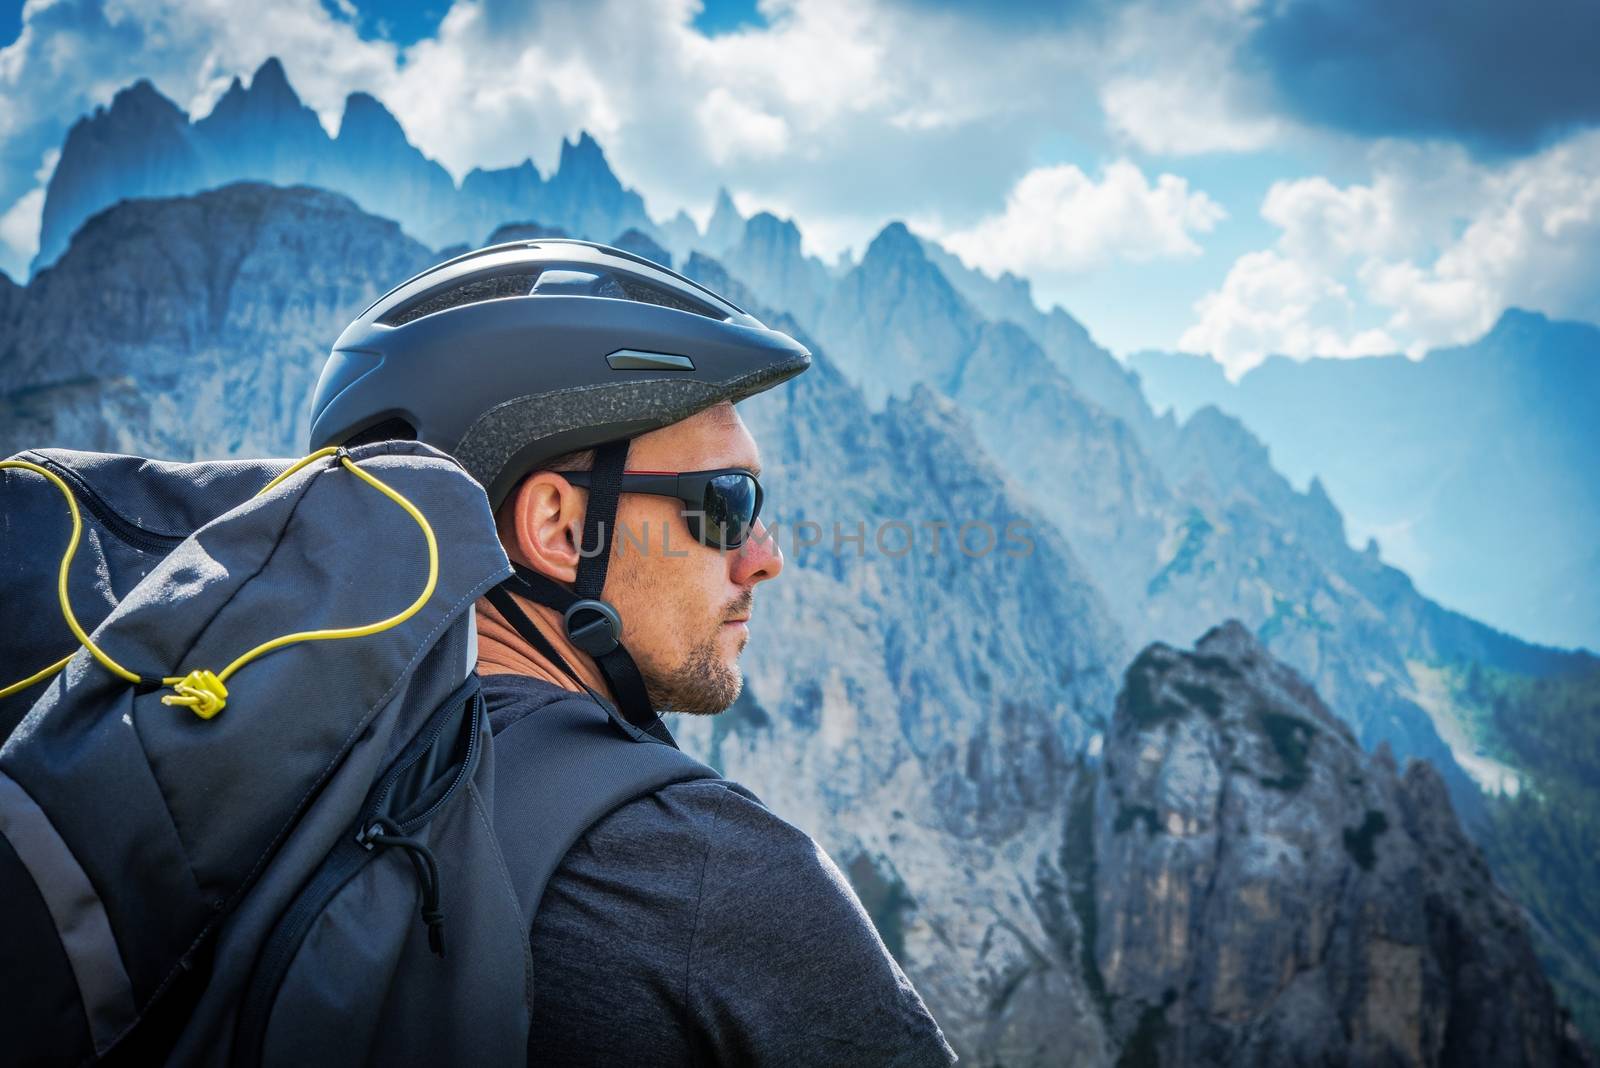 The Mountain Biker in Sunglasses. Caucasian Biker in His 30s Enjoying Fantastic Mountain Vista on the Alps Trail.